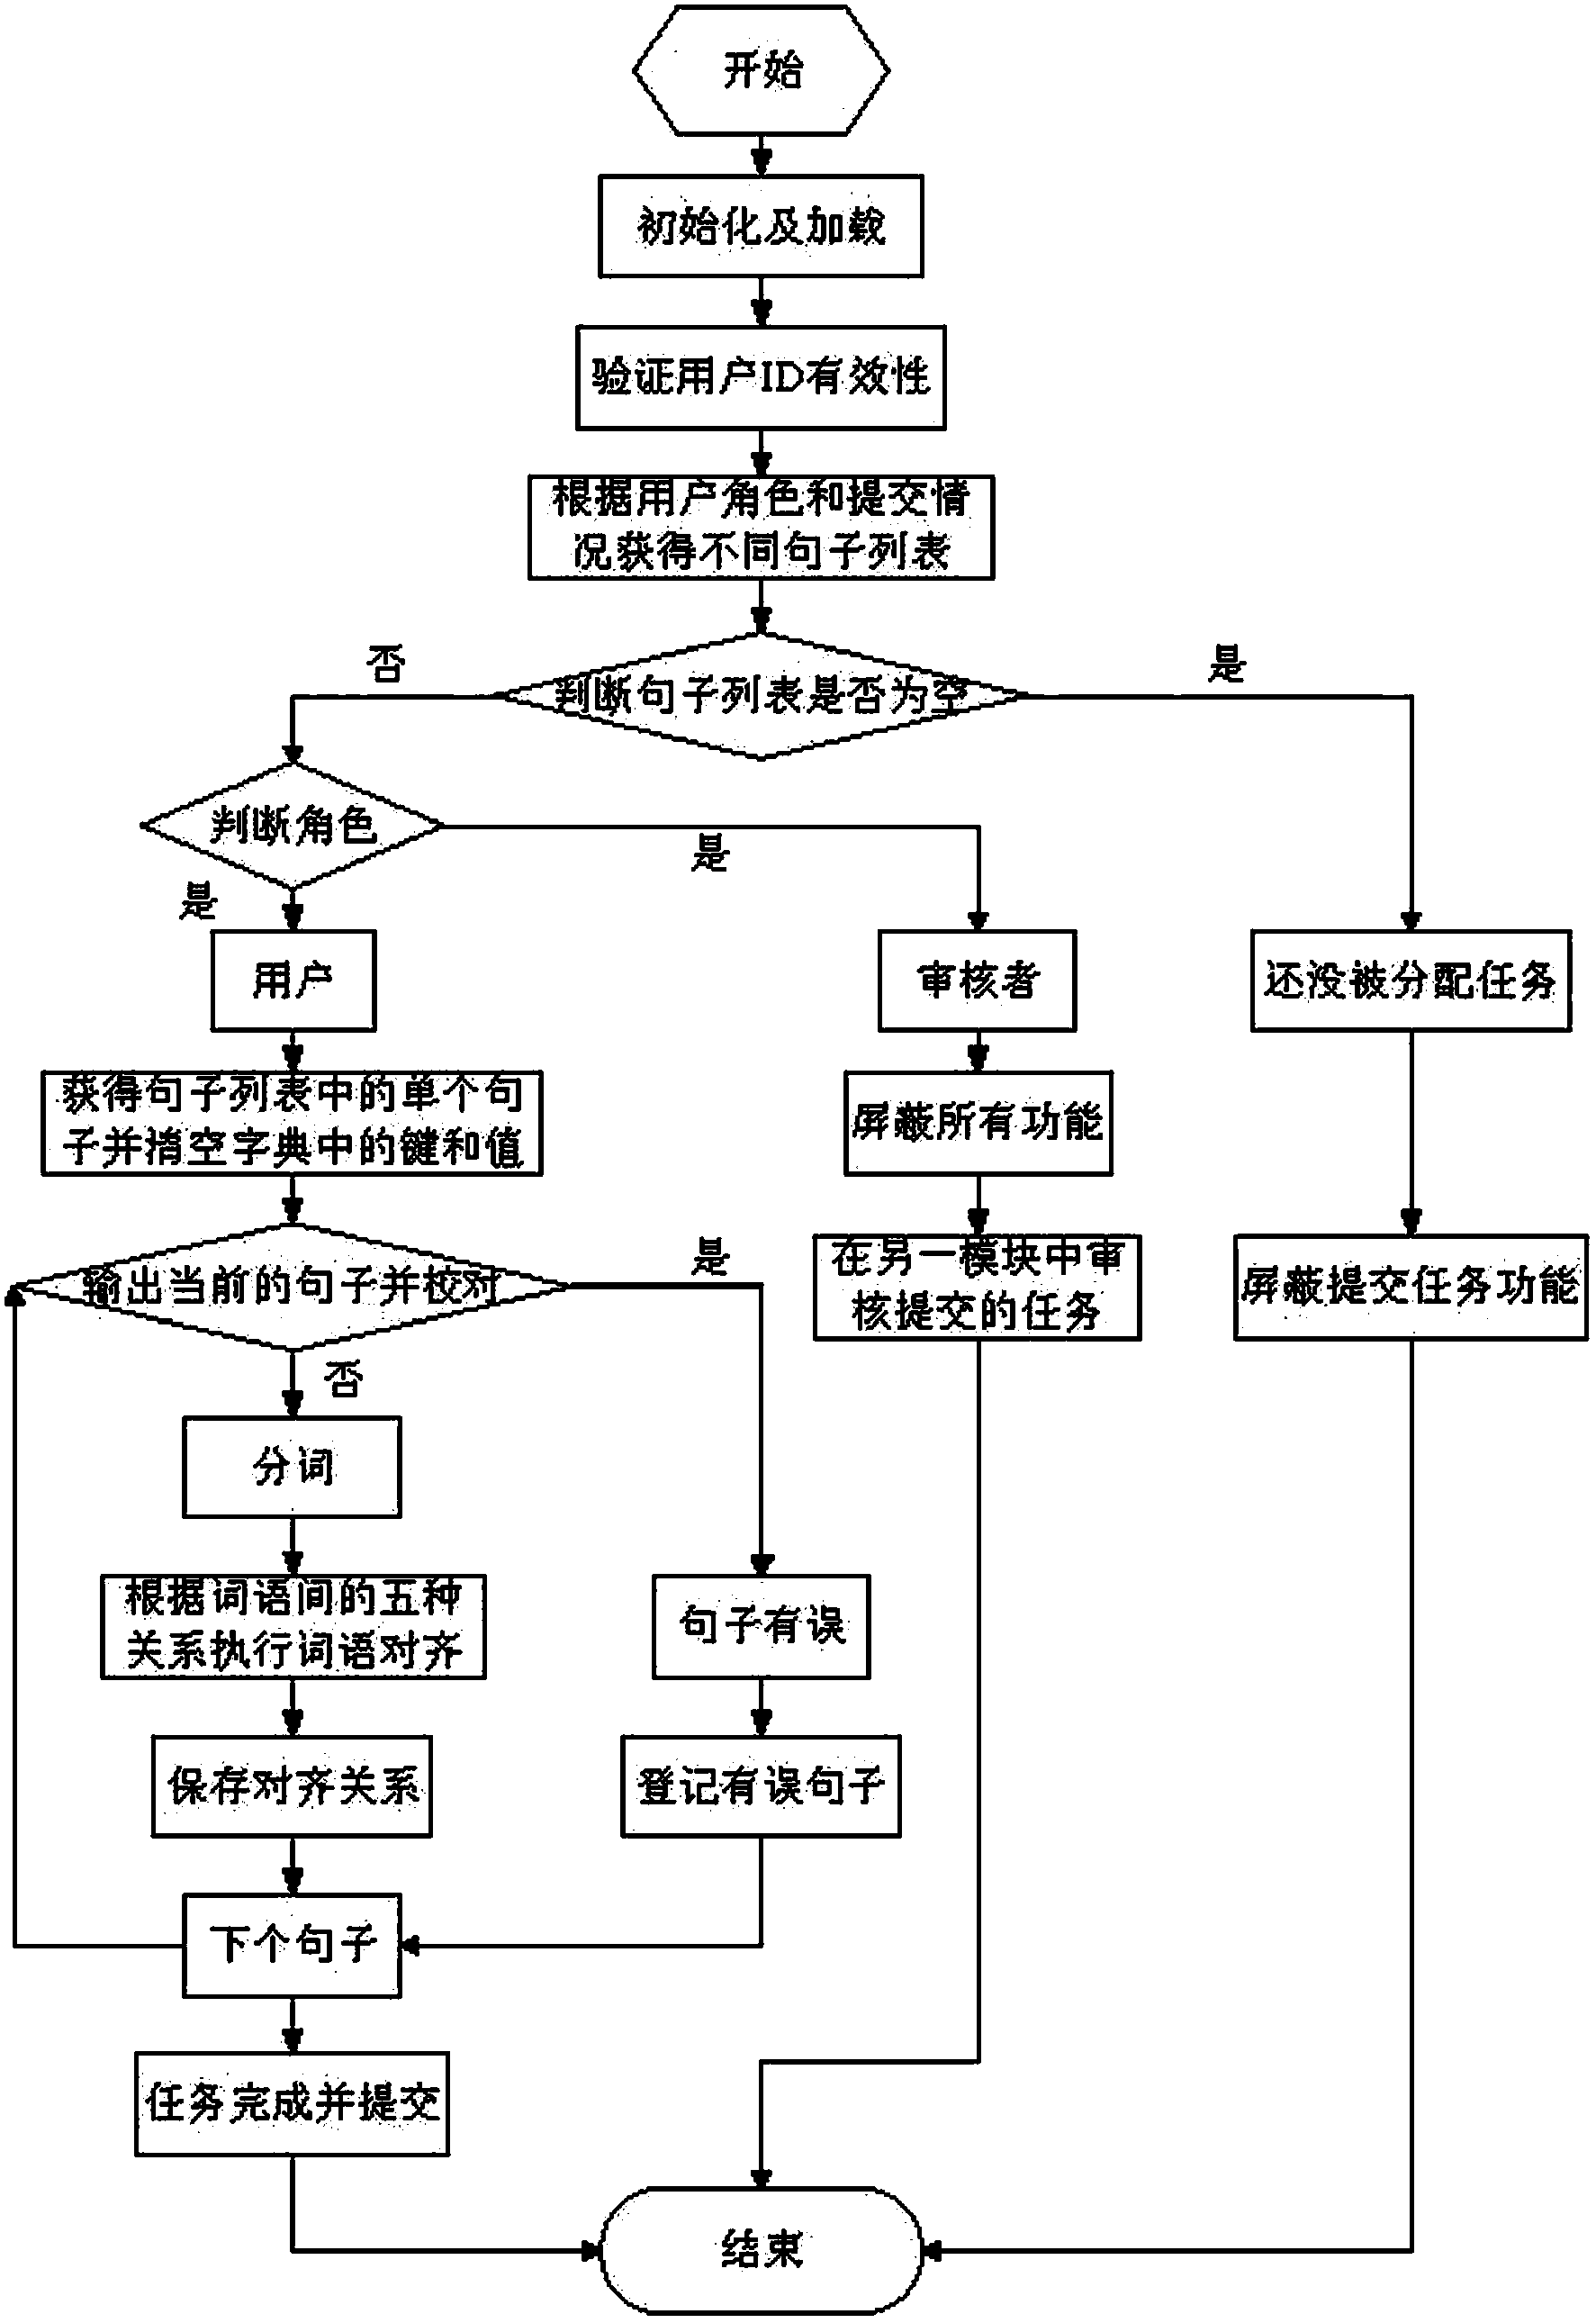 Uygur language word alignment method